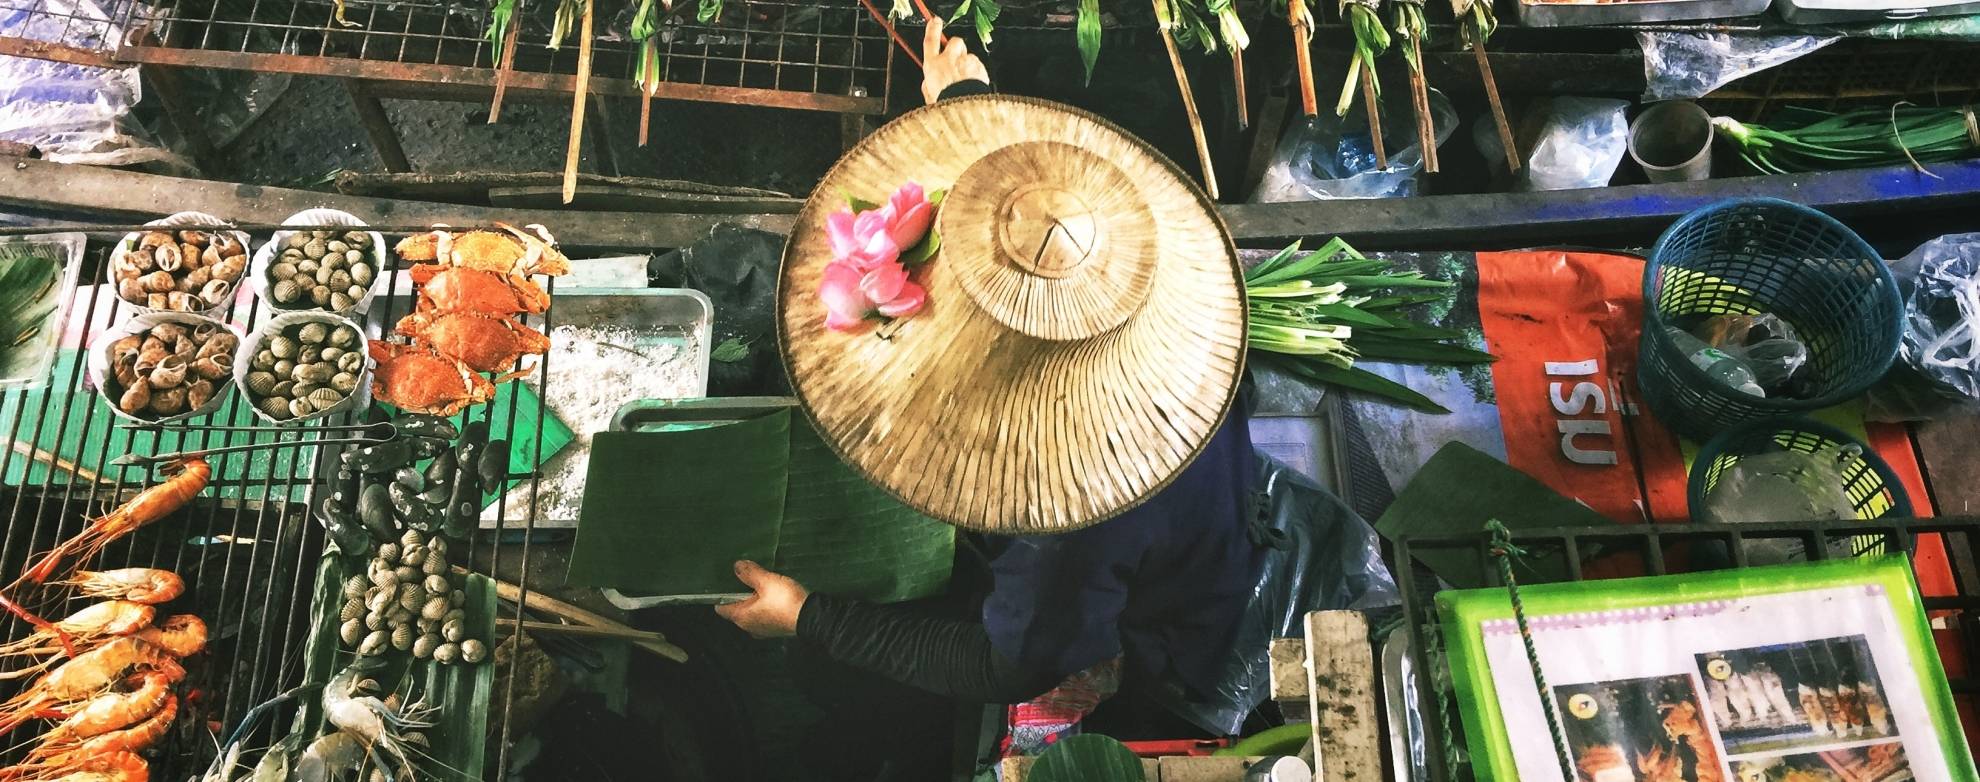 Image of Thai food street vendor by Lisheng Chang via Unsplash